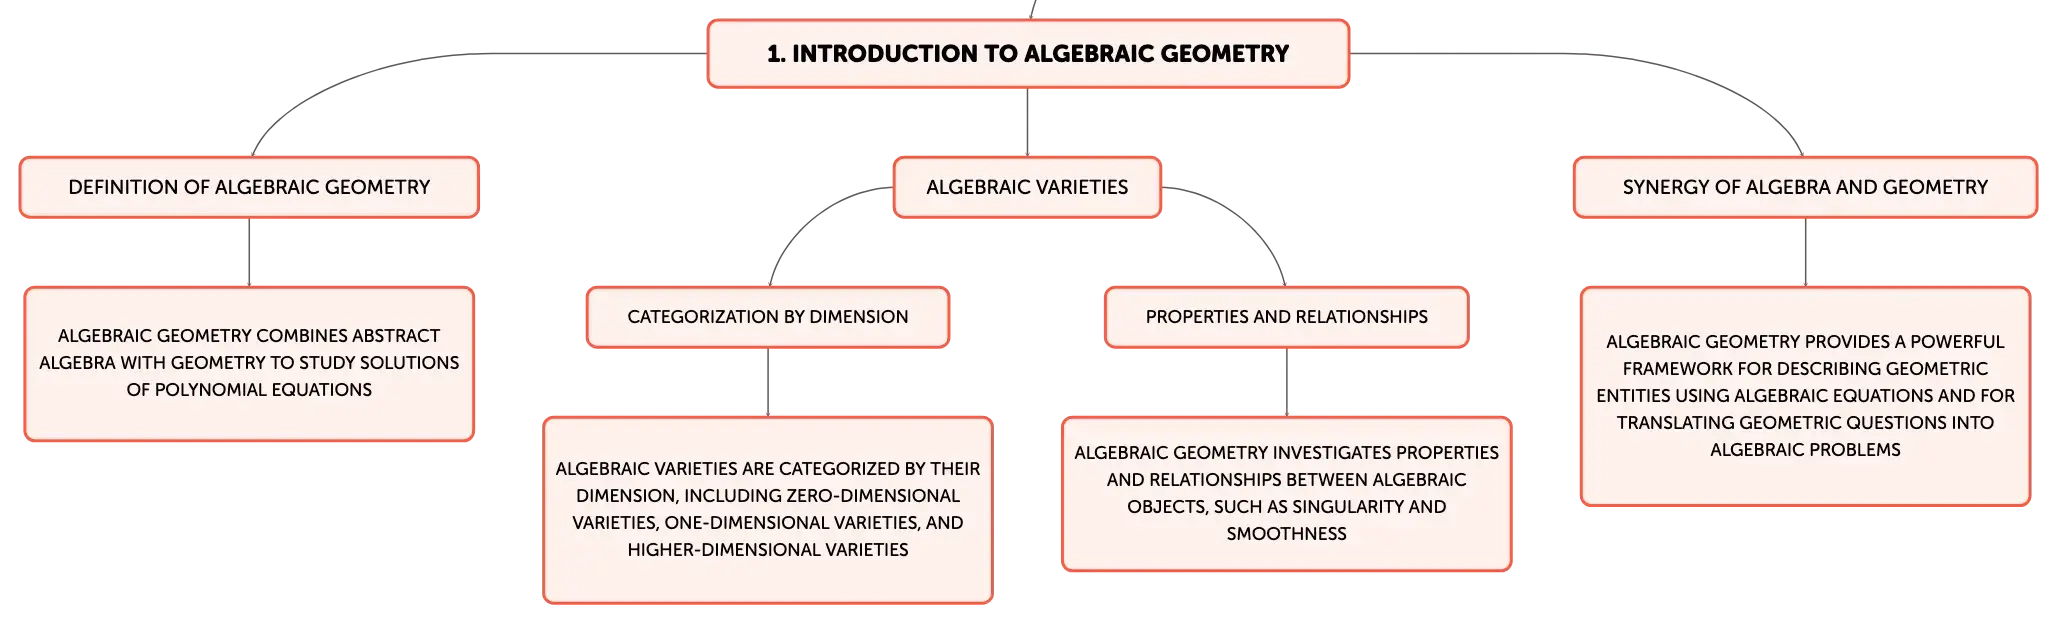 Algebraic Geometry | Algor Cards